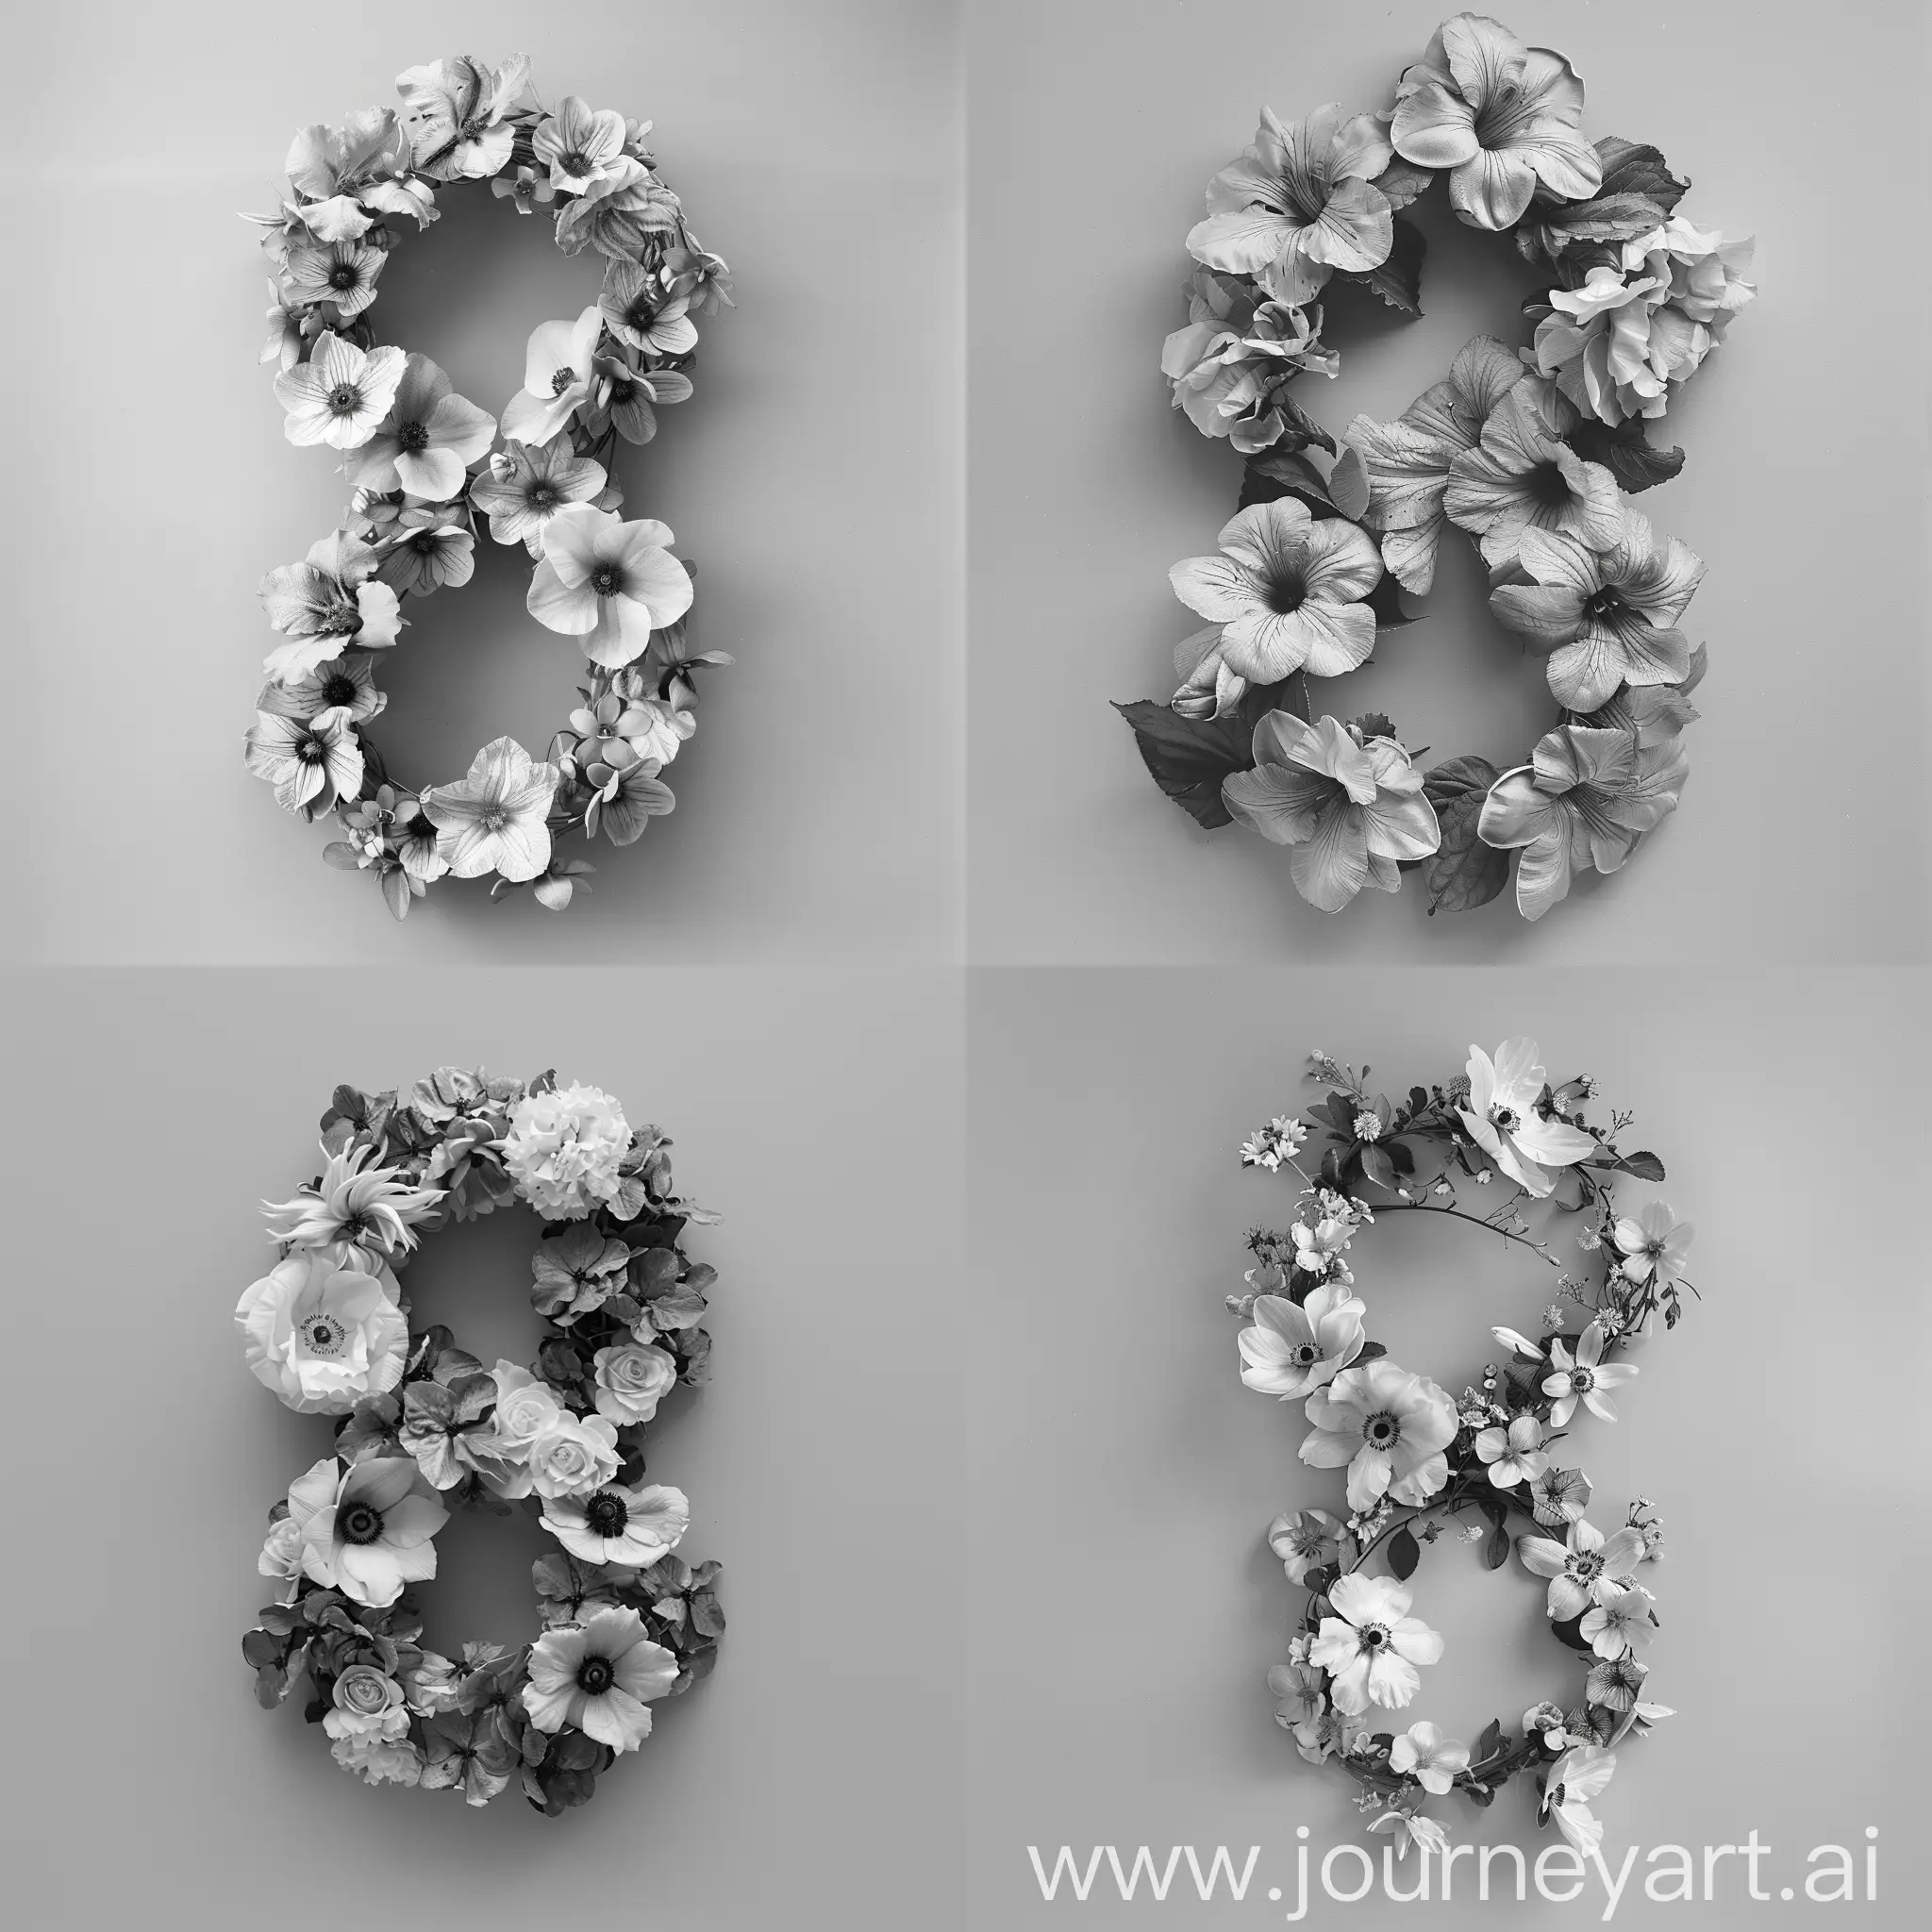 Stylish-Magazine-Photo-of-Flower-Arrangement-in-Monochrome